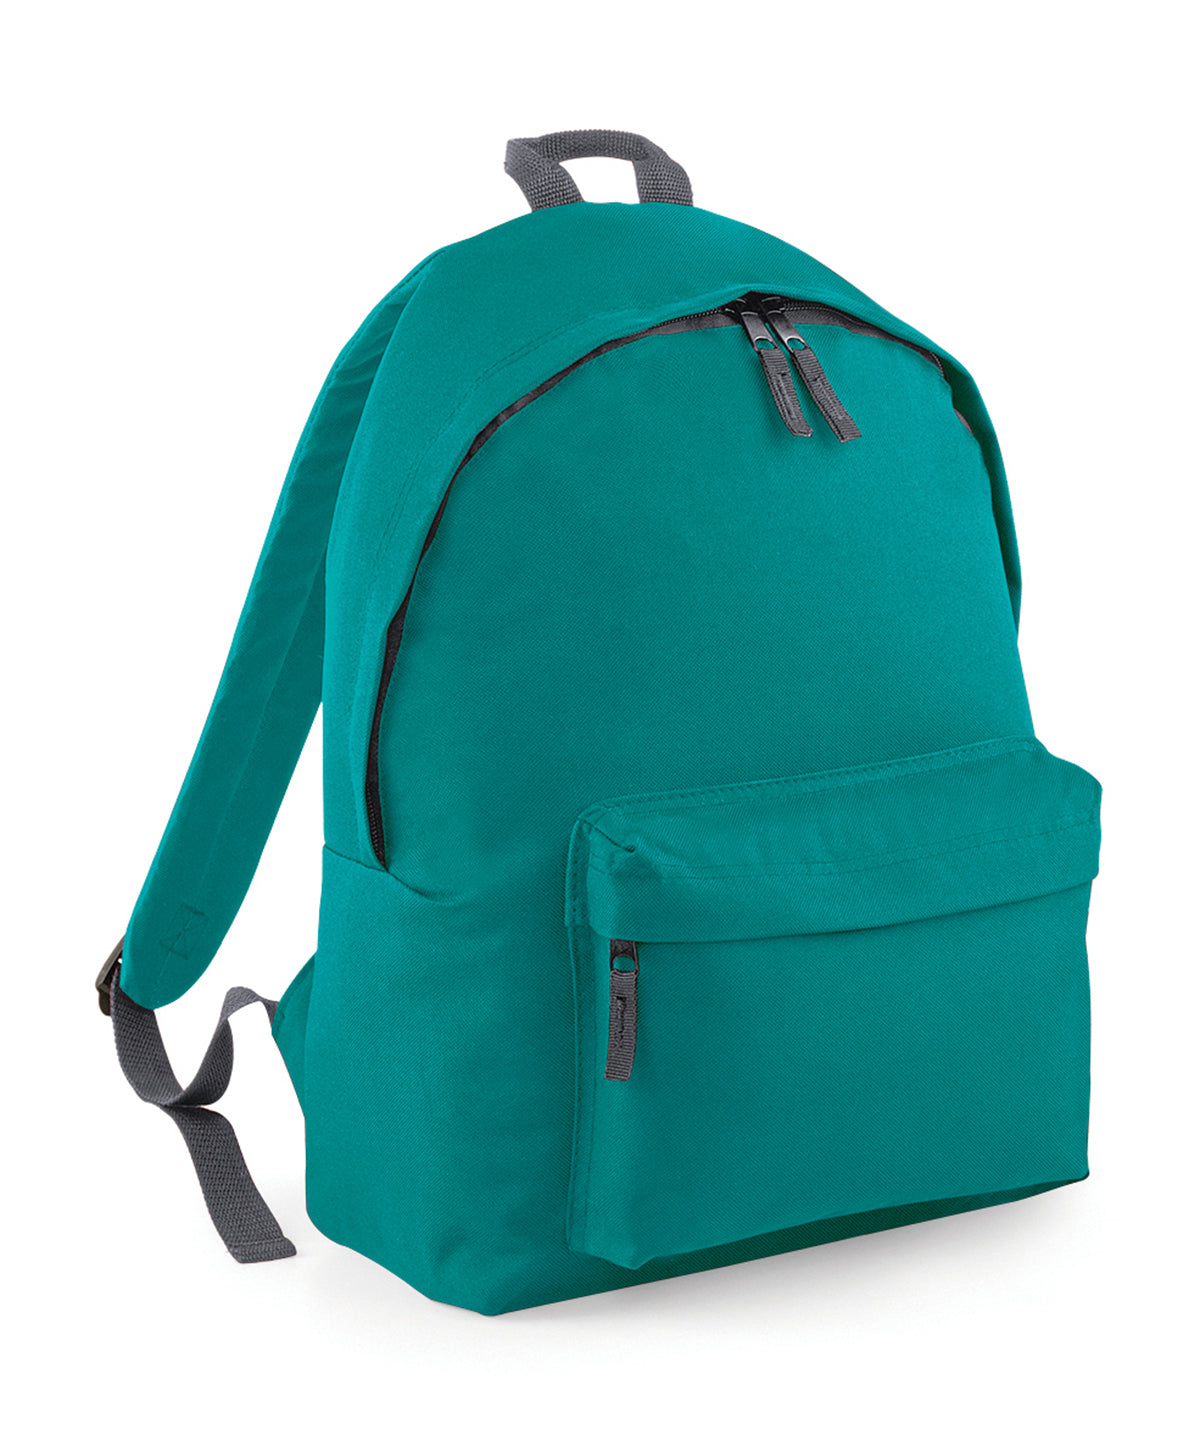 Personalised Bags - Mid Green Bagbase Original fashion backpack